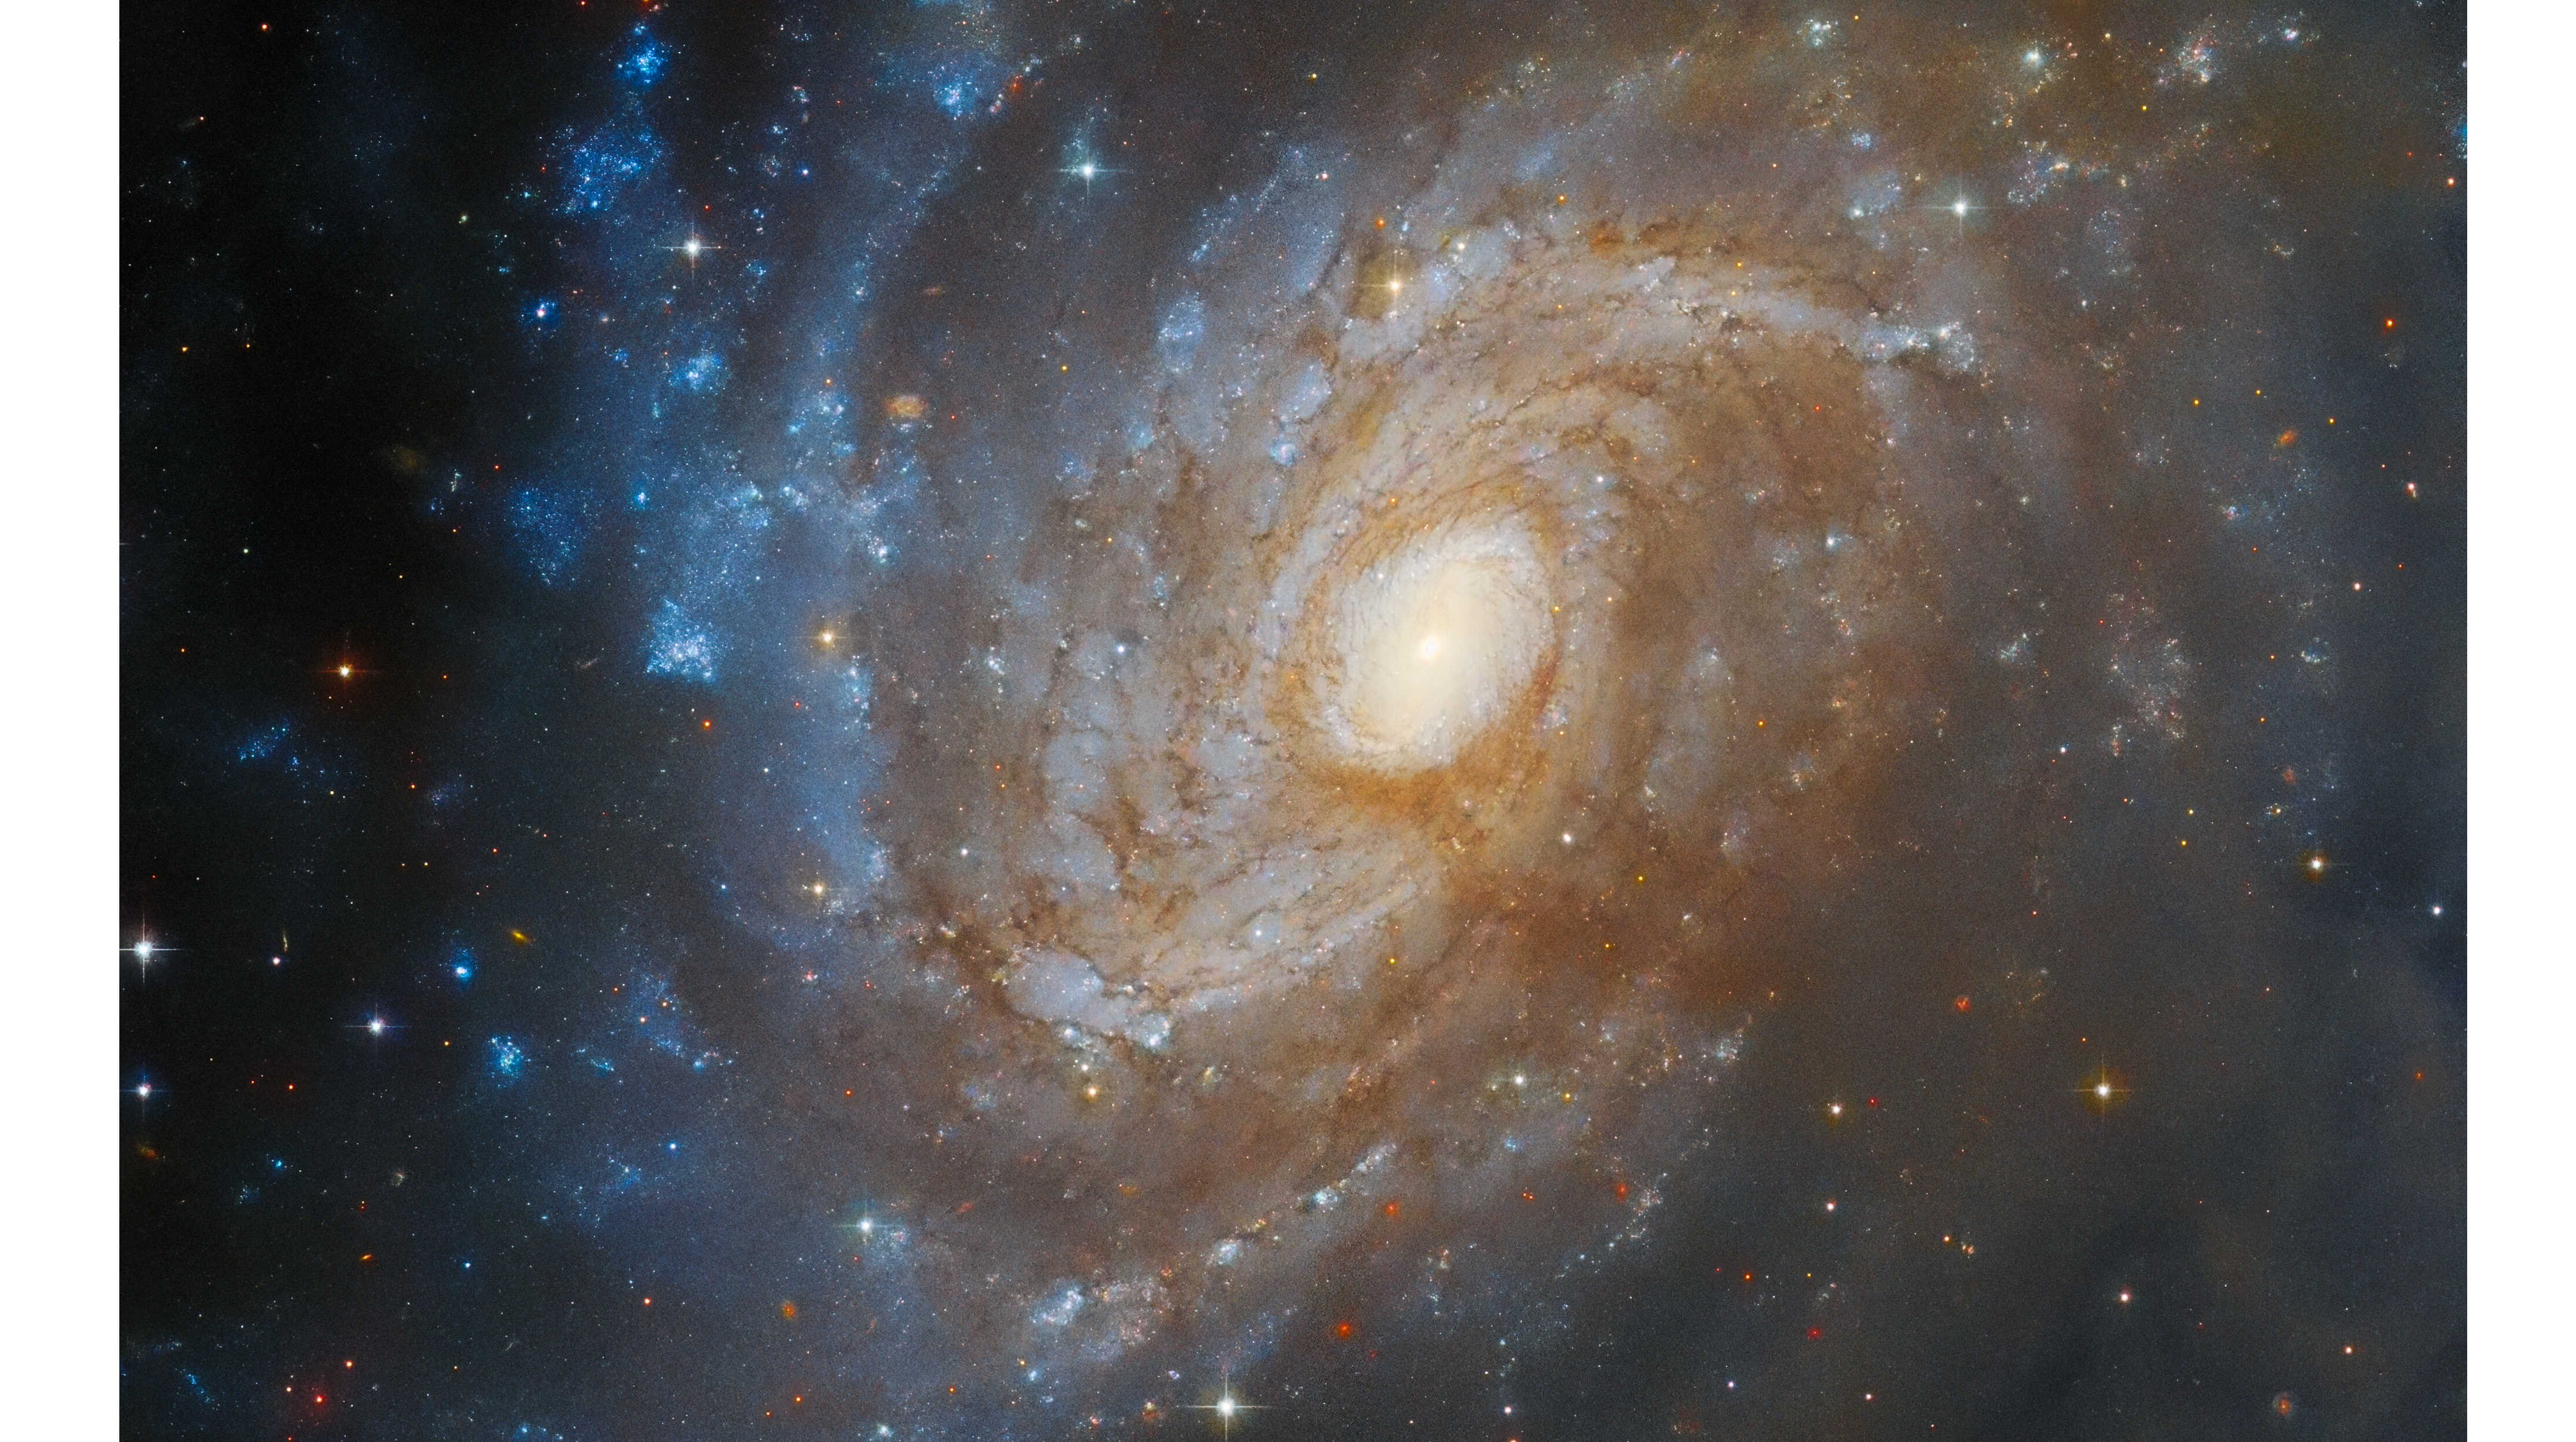 The Hubble telescope saw a spiral galaxy in a dark cloud